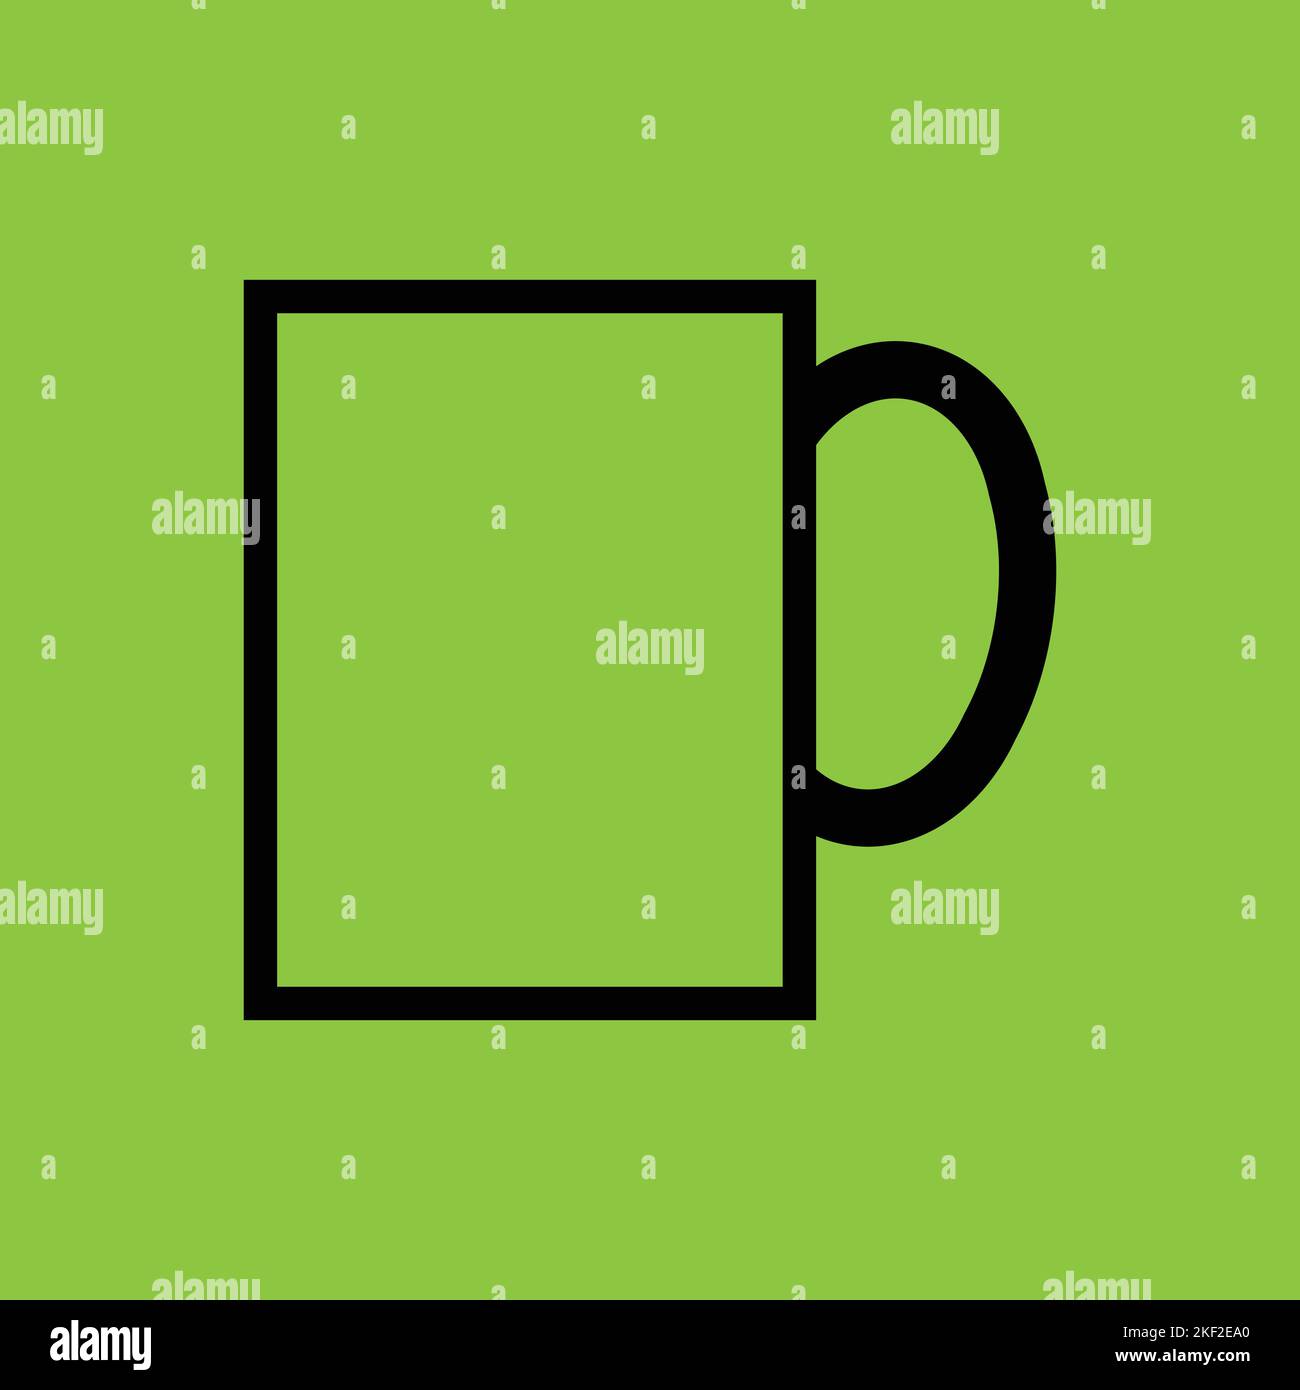 Symbol für Kaffeetasse auf grünem Hintergrund isoliert. Café-Konzept. - Vektor. Vektorgrafik Stock Vektor